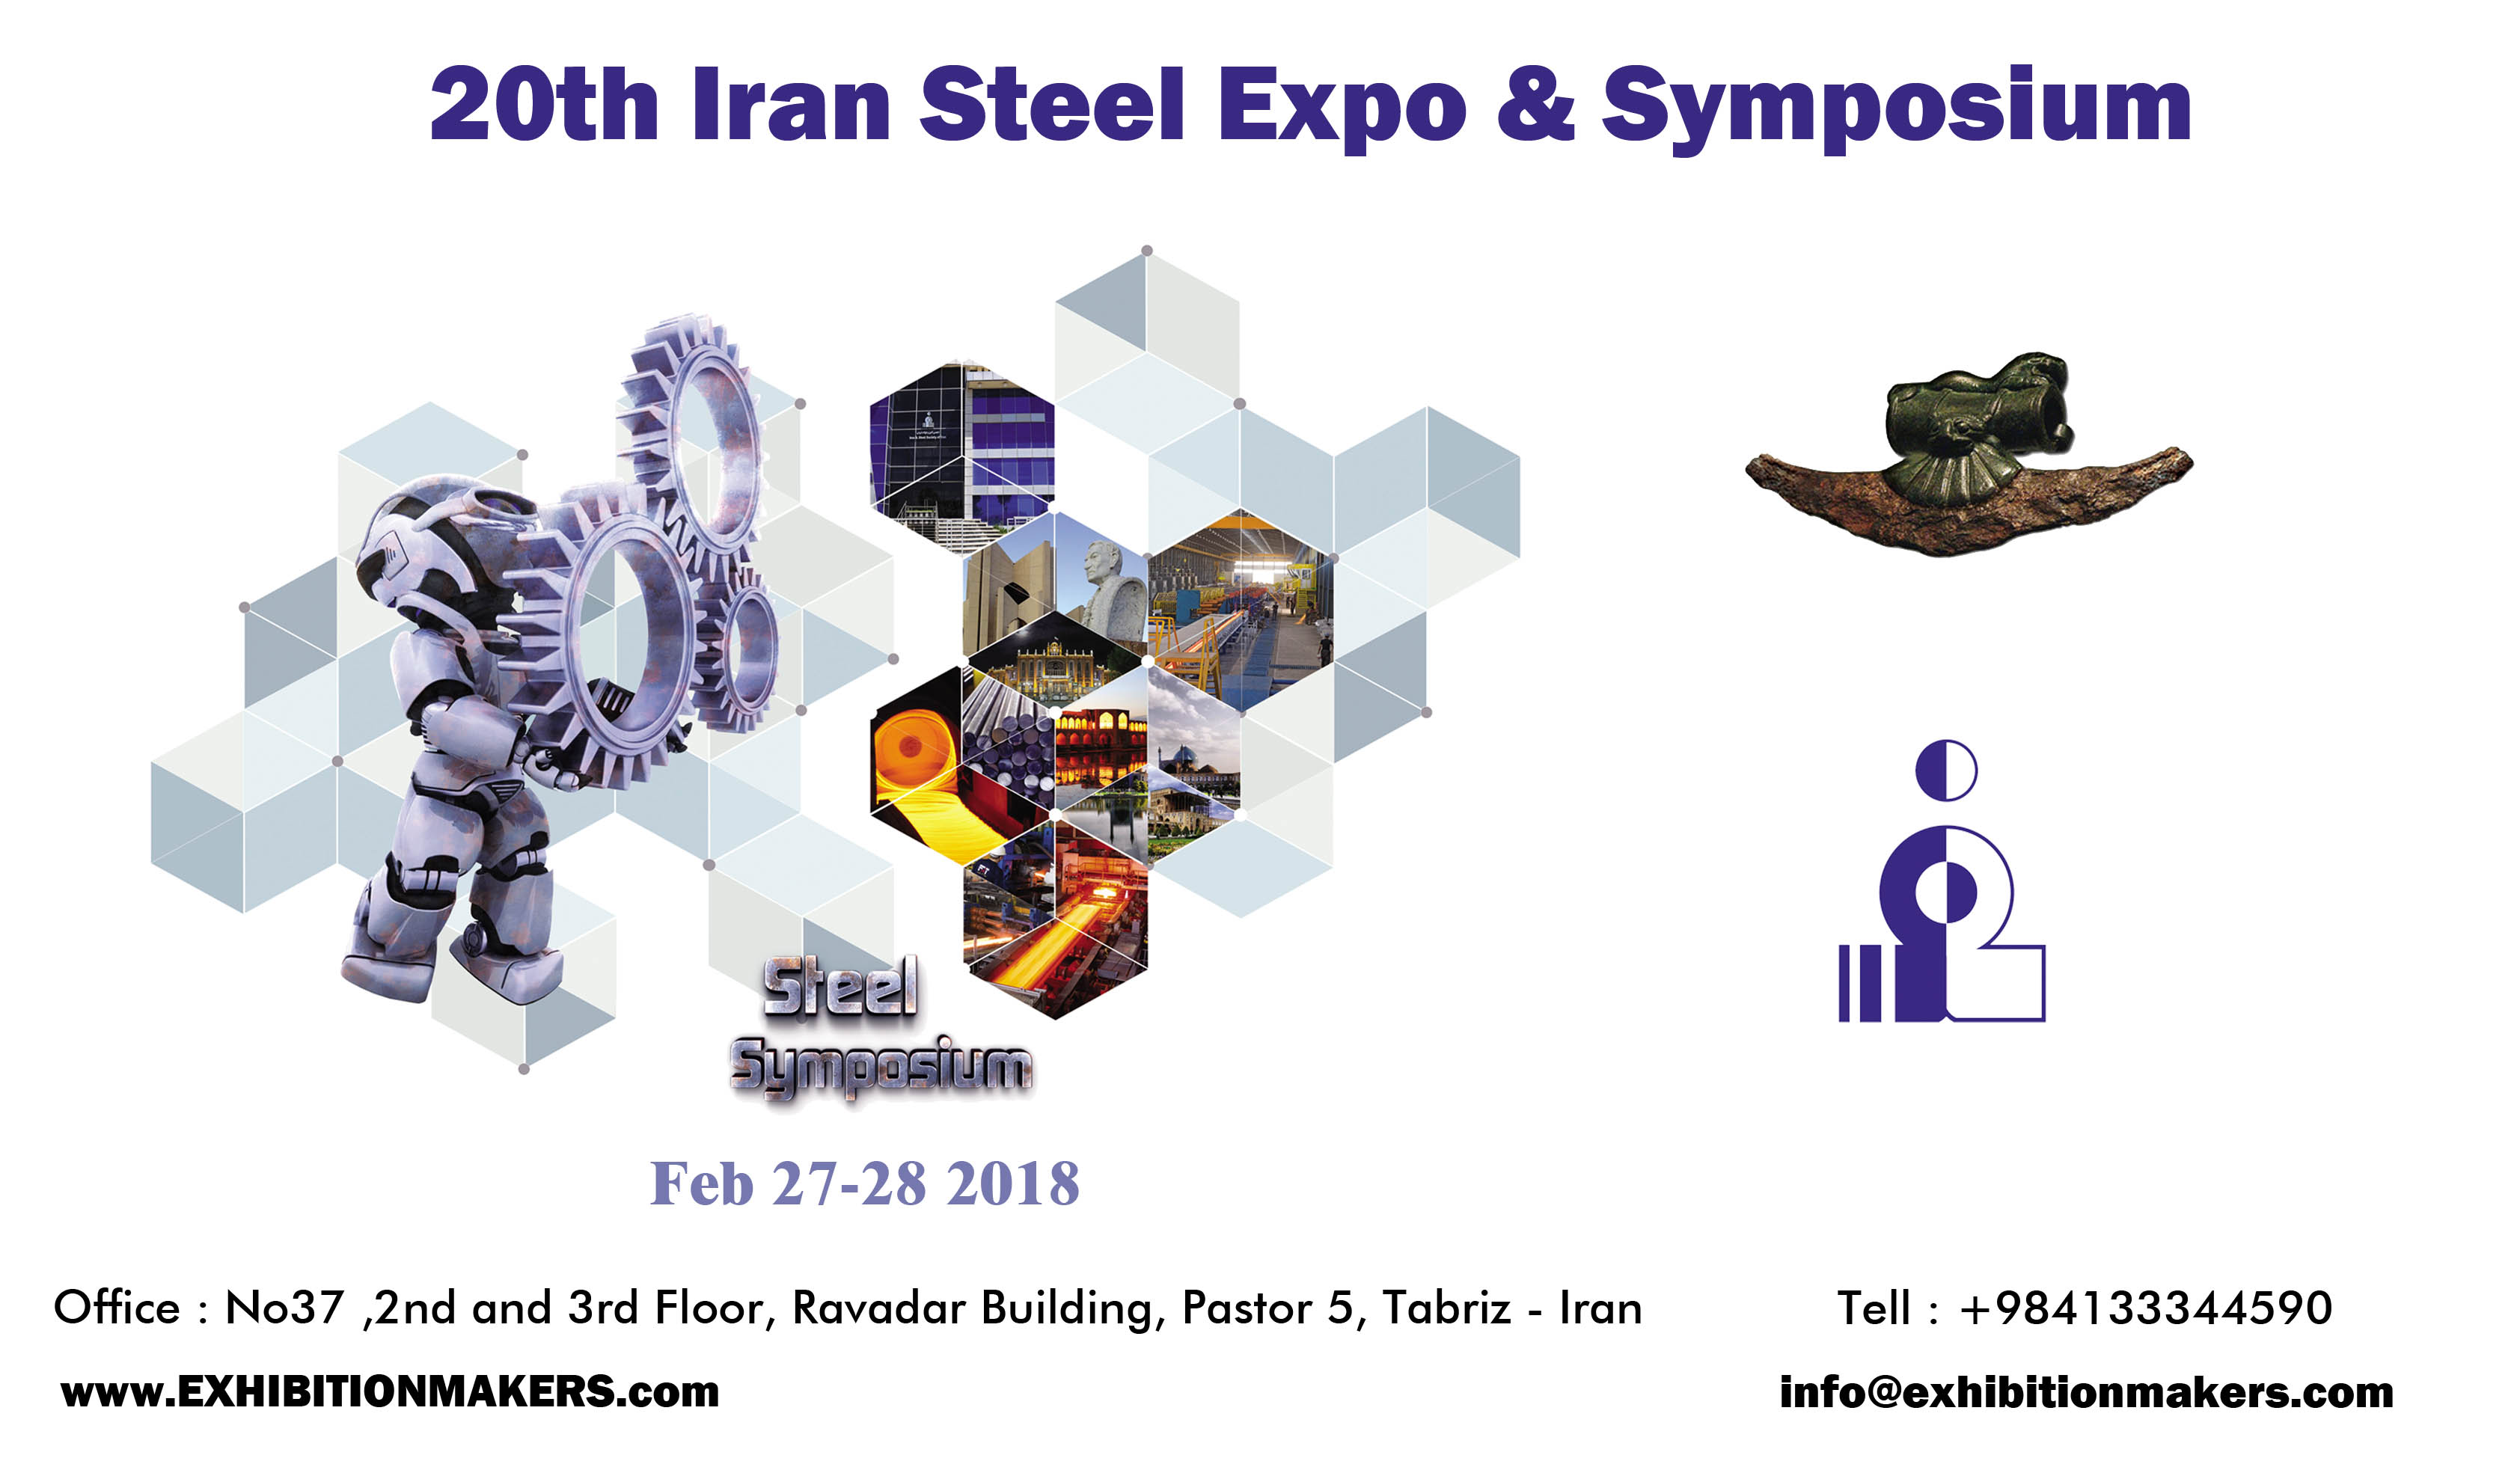 Registration for Iran Steel Exhibition & Symposium 2018